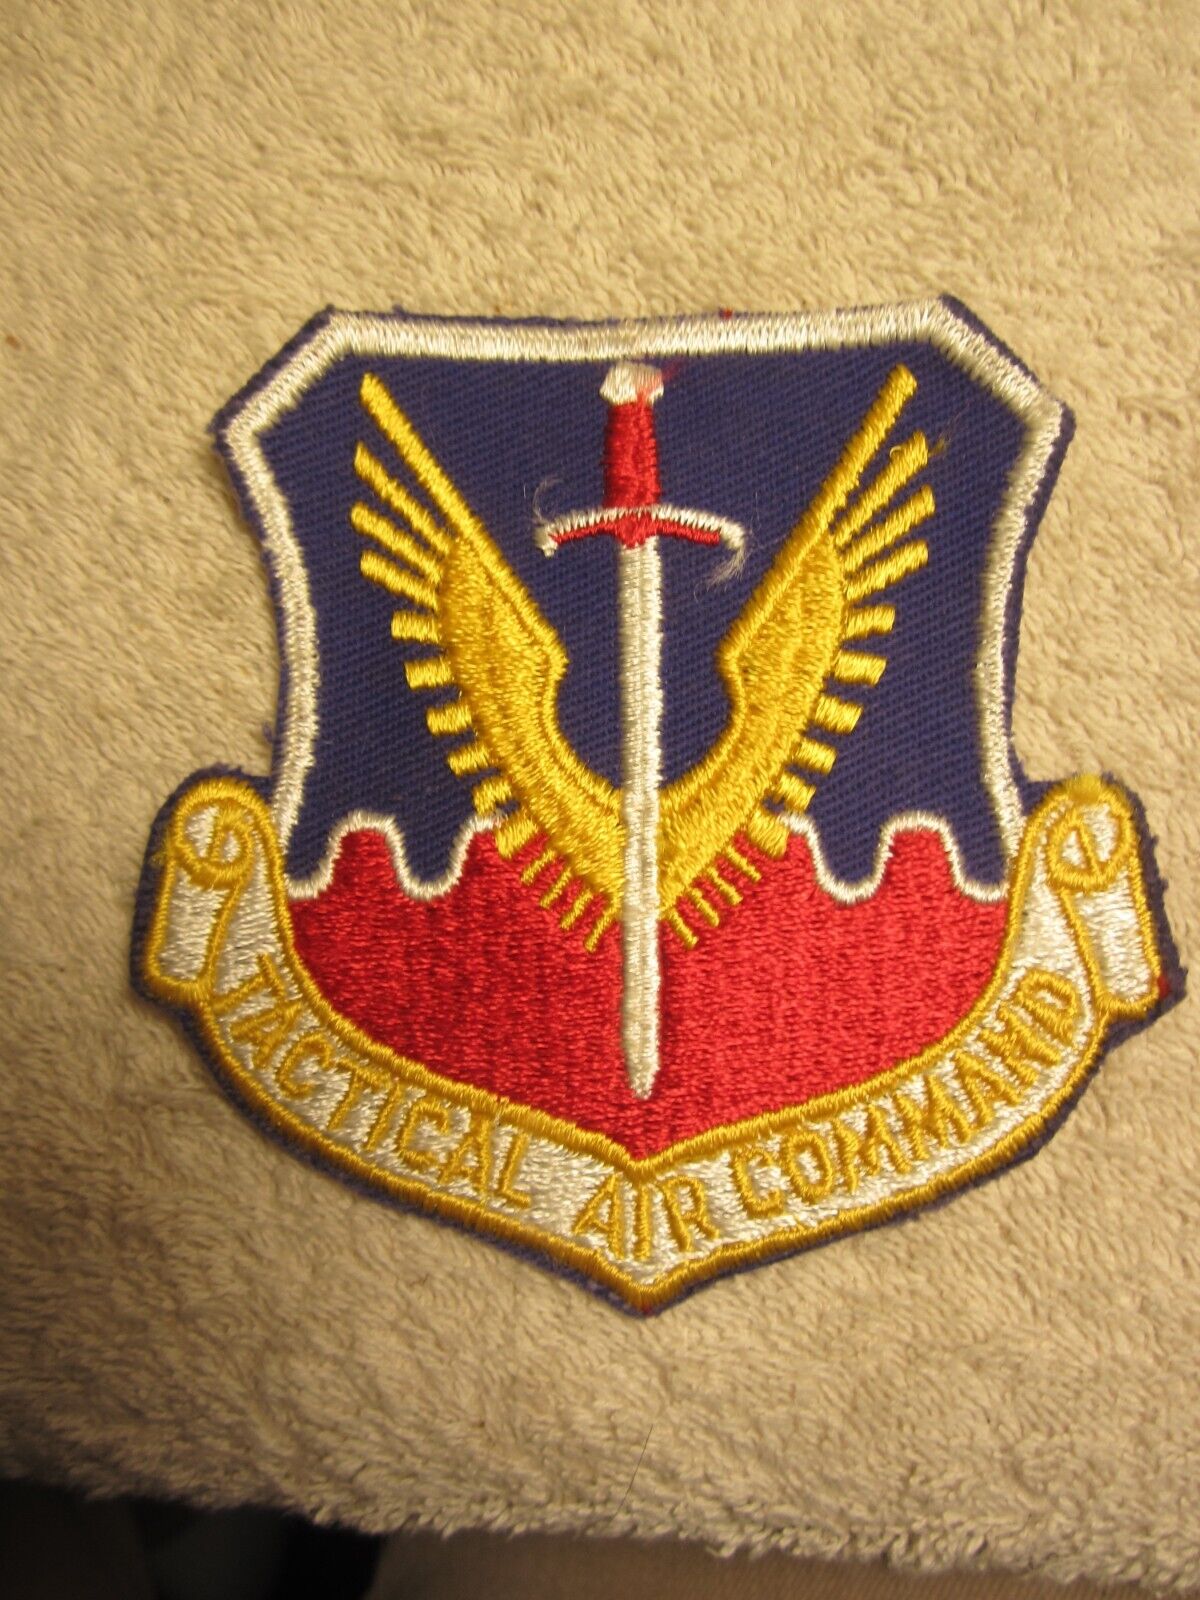 USAF TACTICAL AIR COMMAND VINTAGE ORIGINAL PATCH